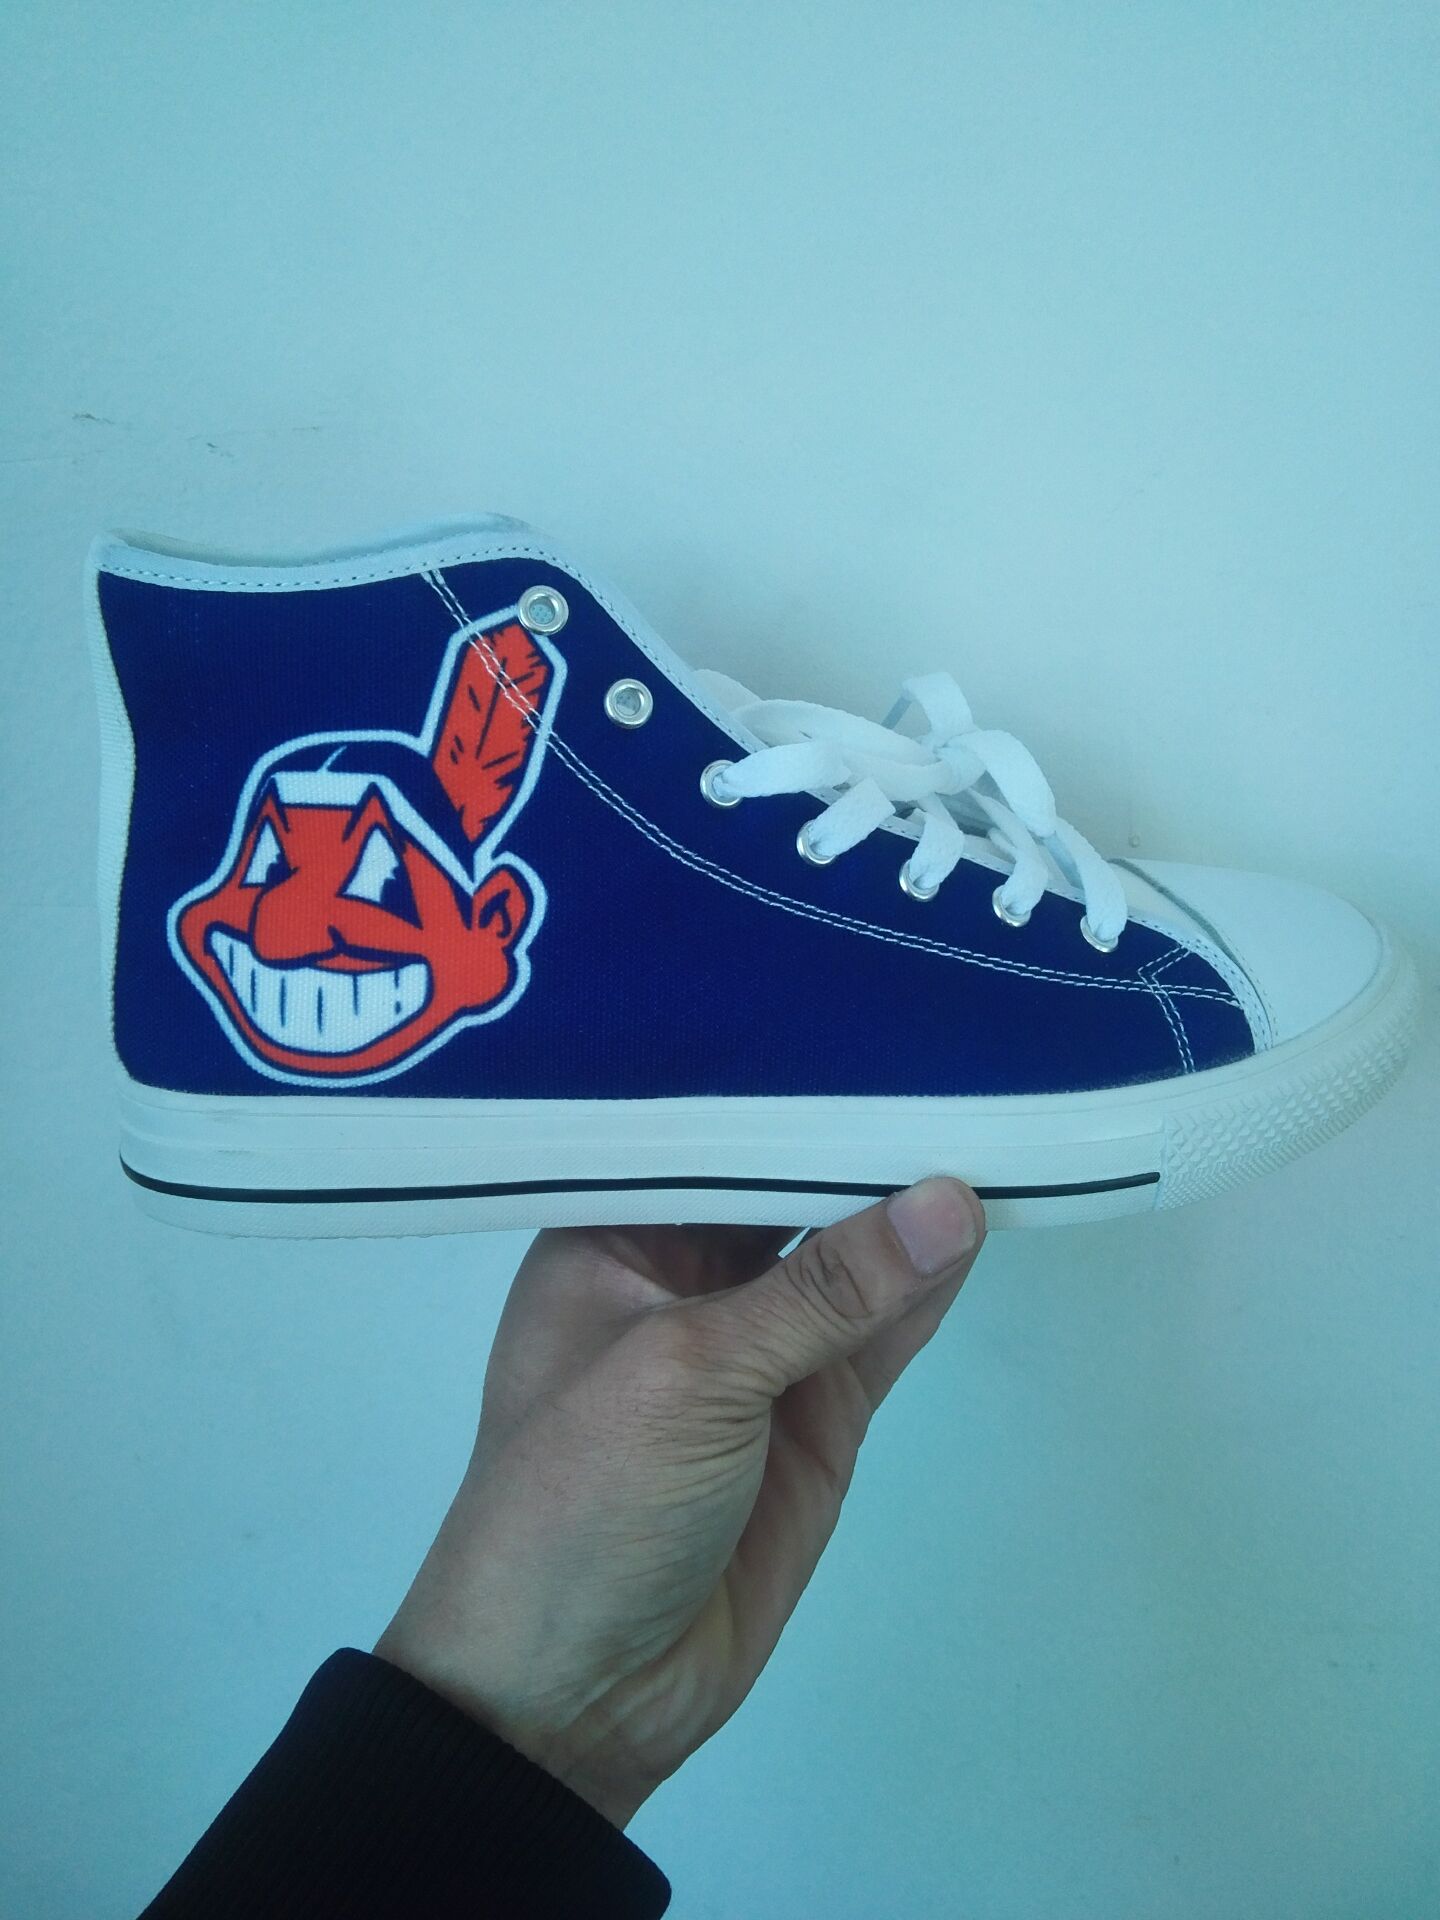 MLB Cleveland Indians Blue Shoes